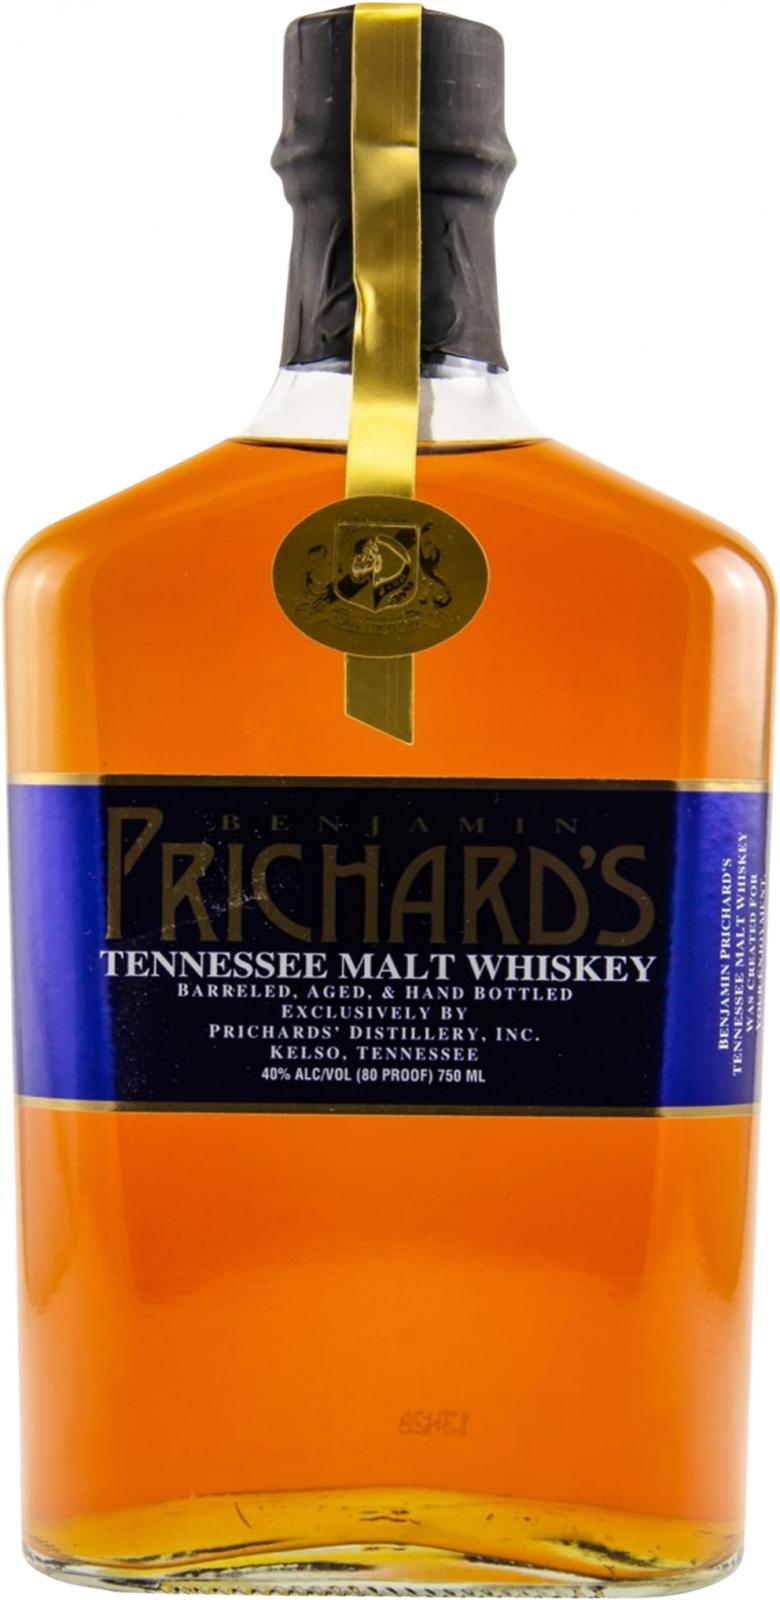 Prichard's Tennessee Malt Whiskey